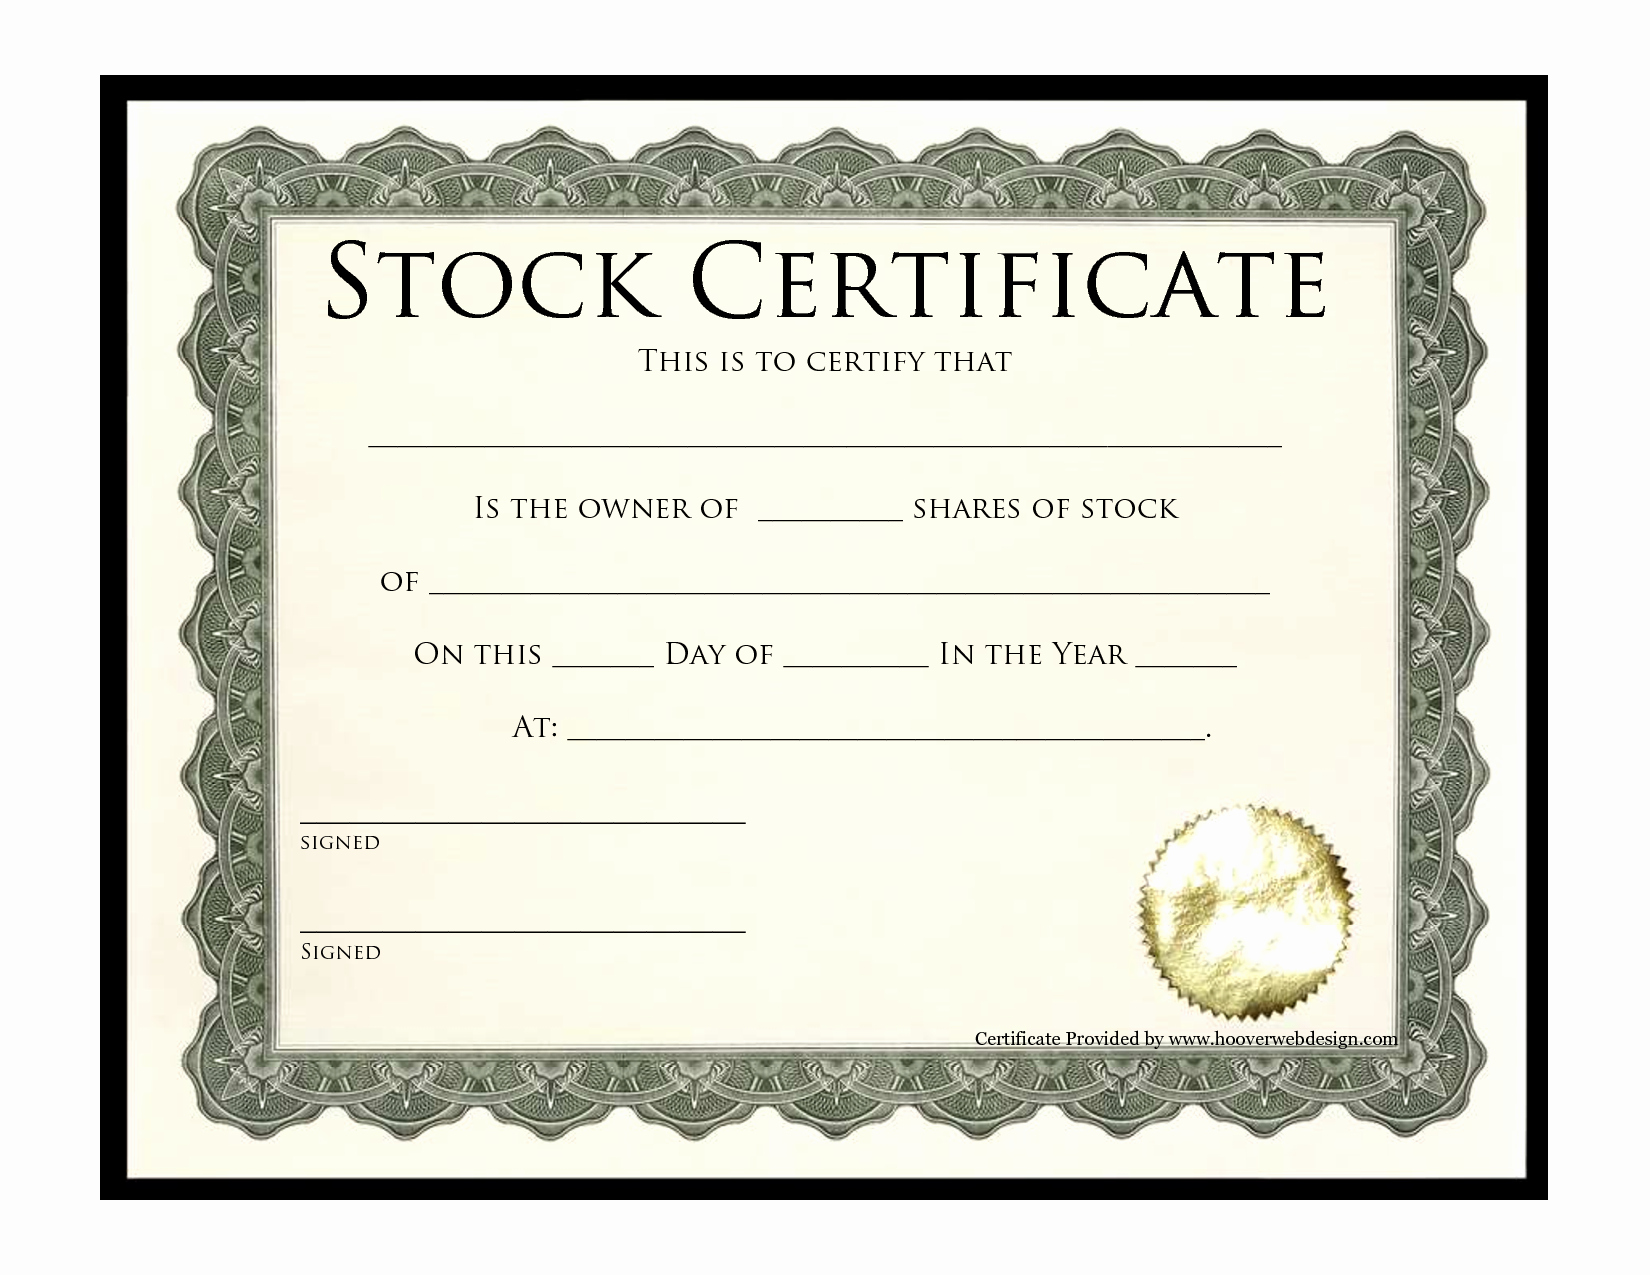 Corporate Stock Certificate Template New Stock Certificate Template